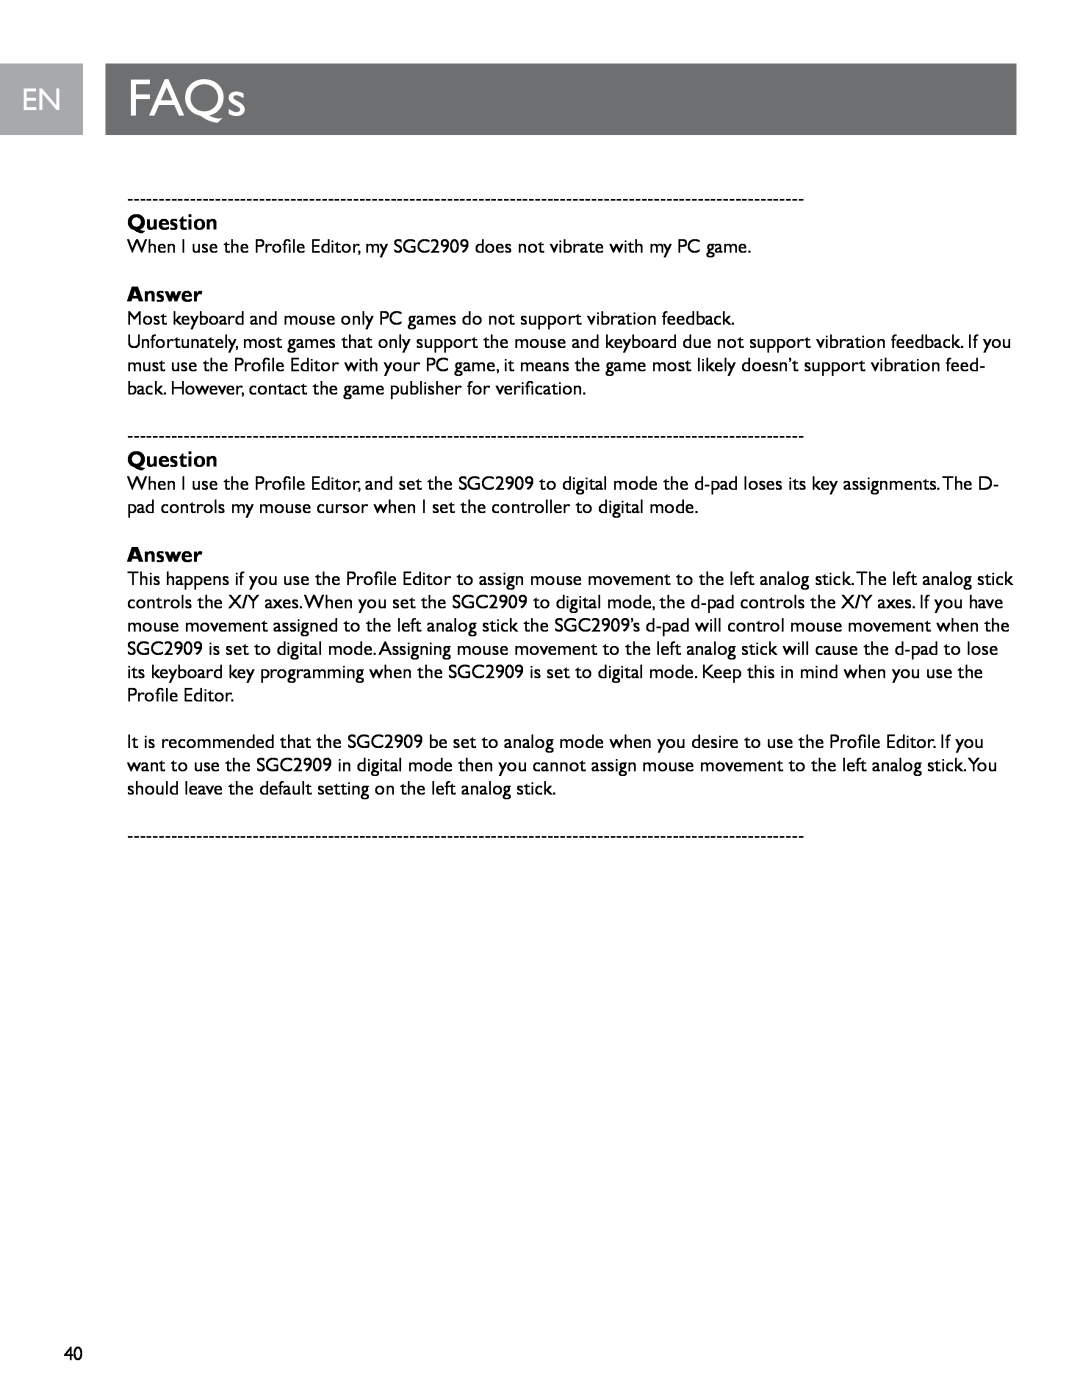 Philips SGC2909 user manual EN FAQs, Question, Answer 